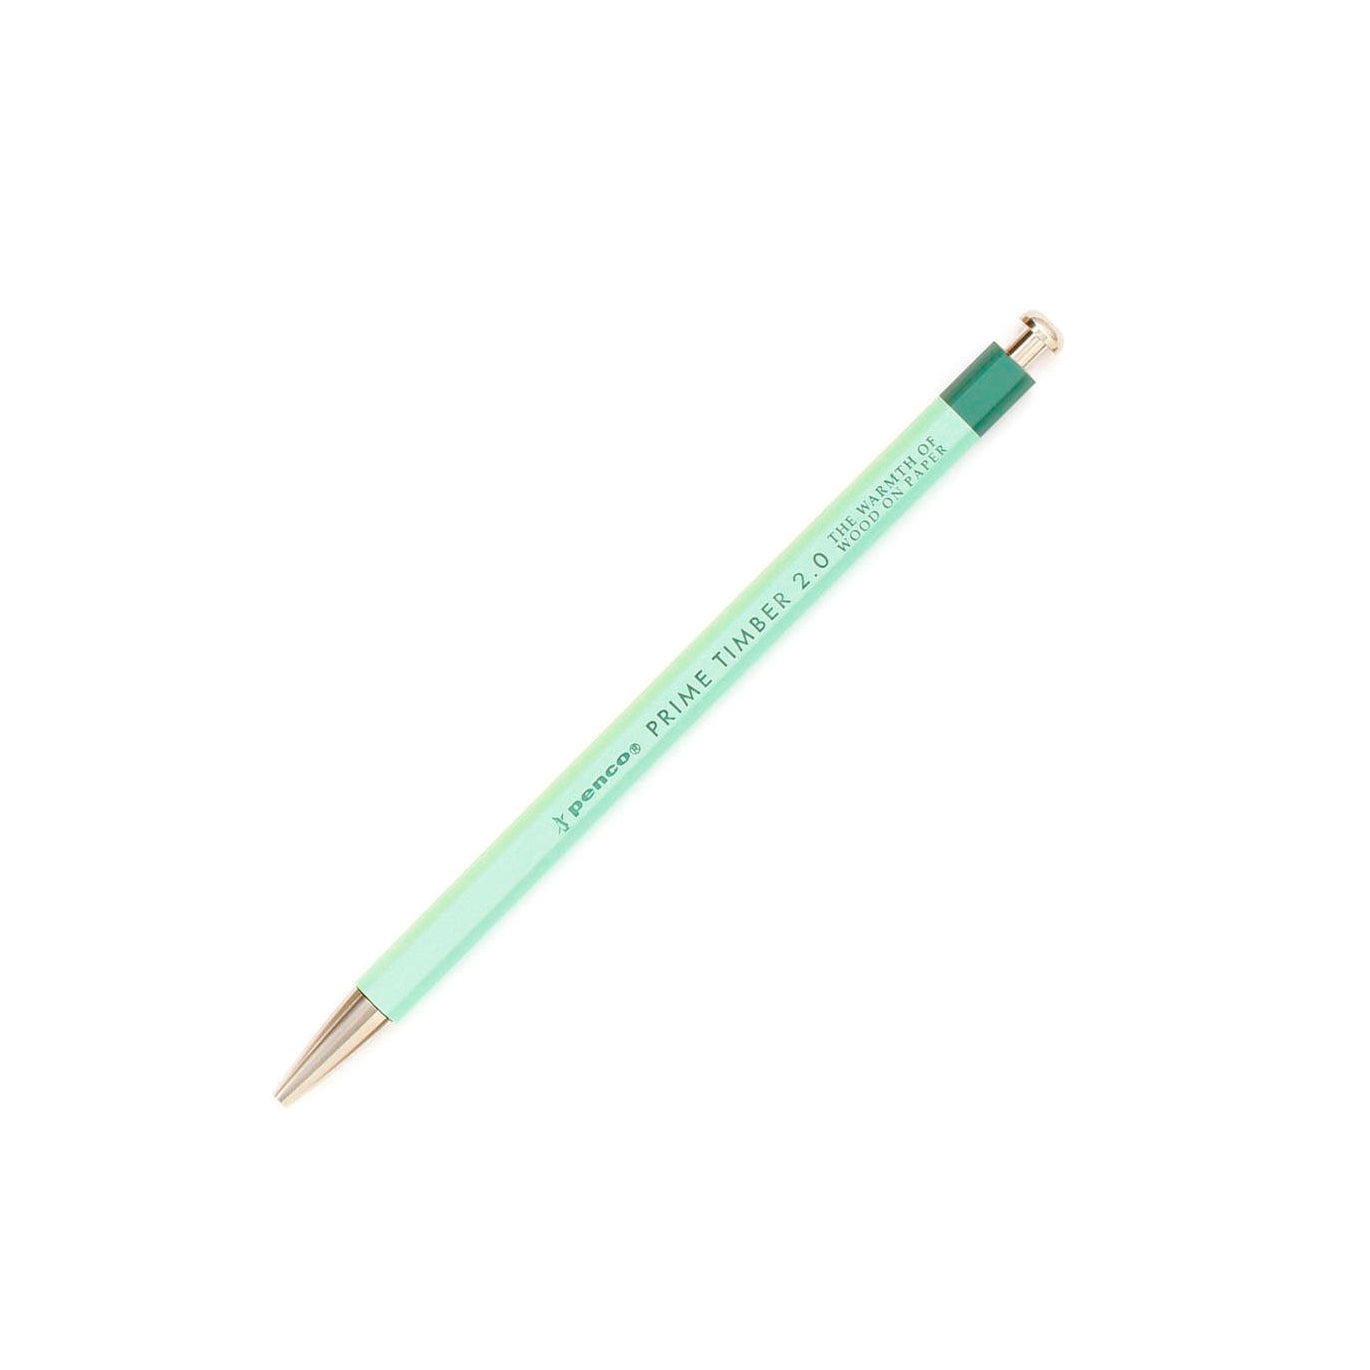 Penco Prime Timer Mechanical Pencil